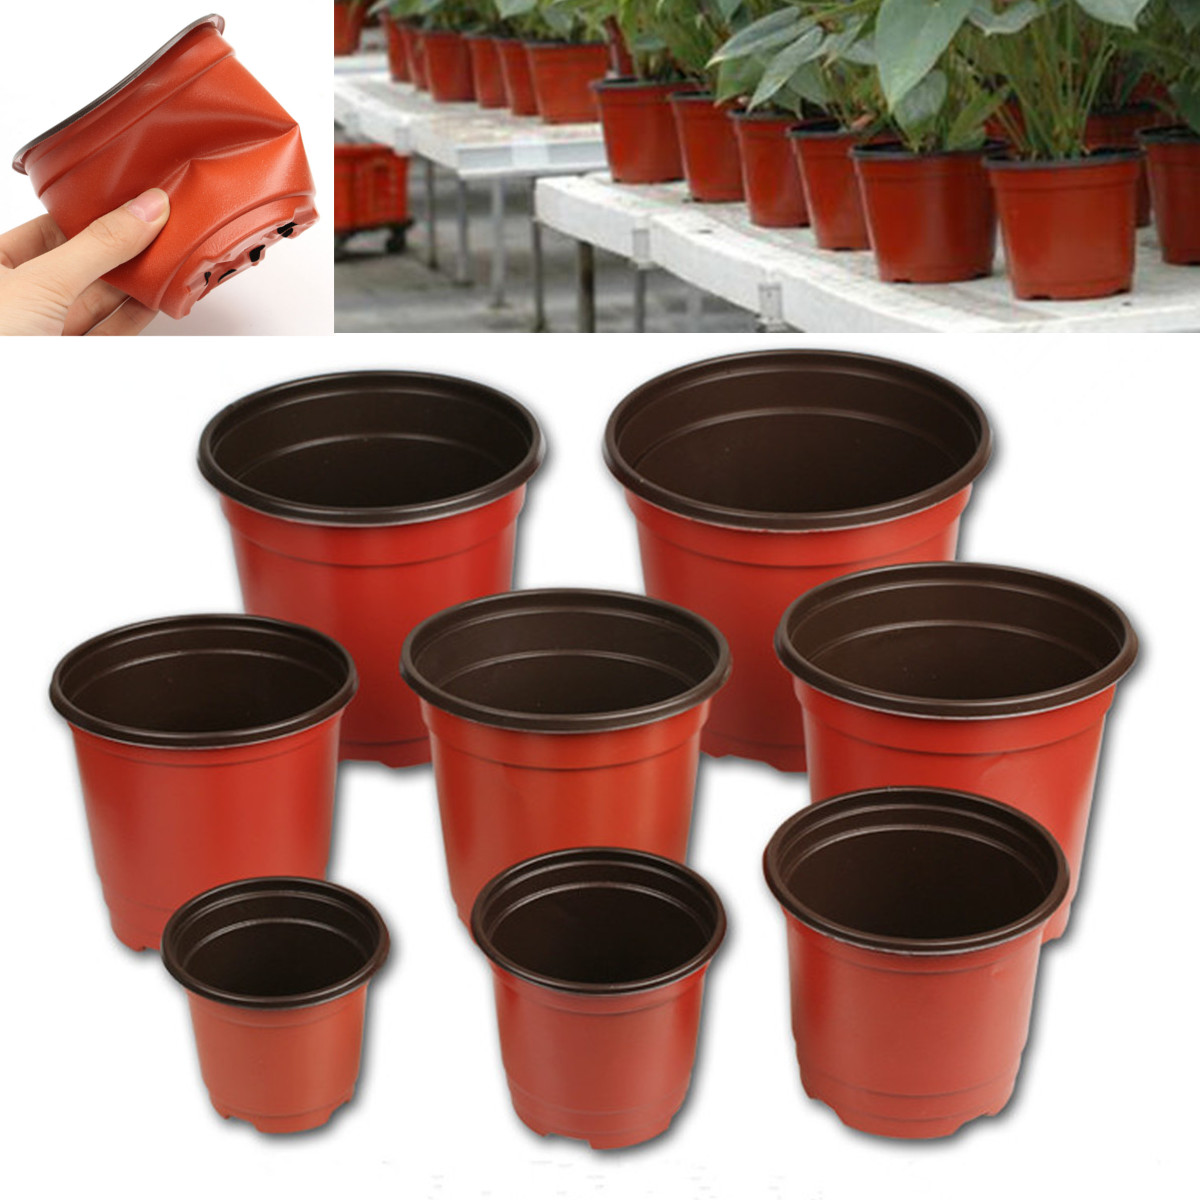 100Pcs Plastic Garden Nursery Pot Flower Terracotta Seedlings Planter Containers Set 14